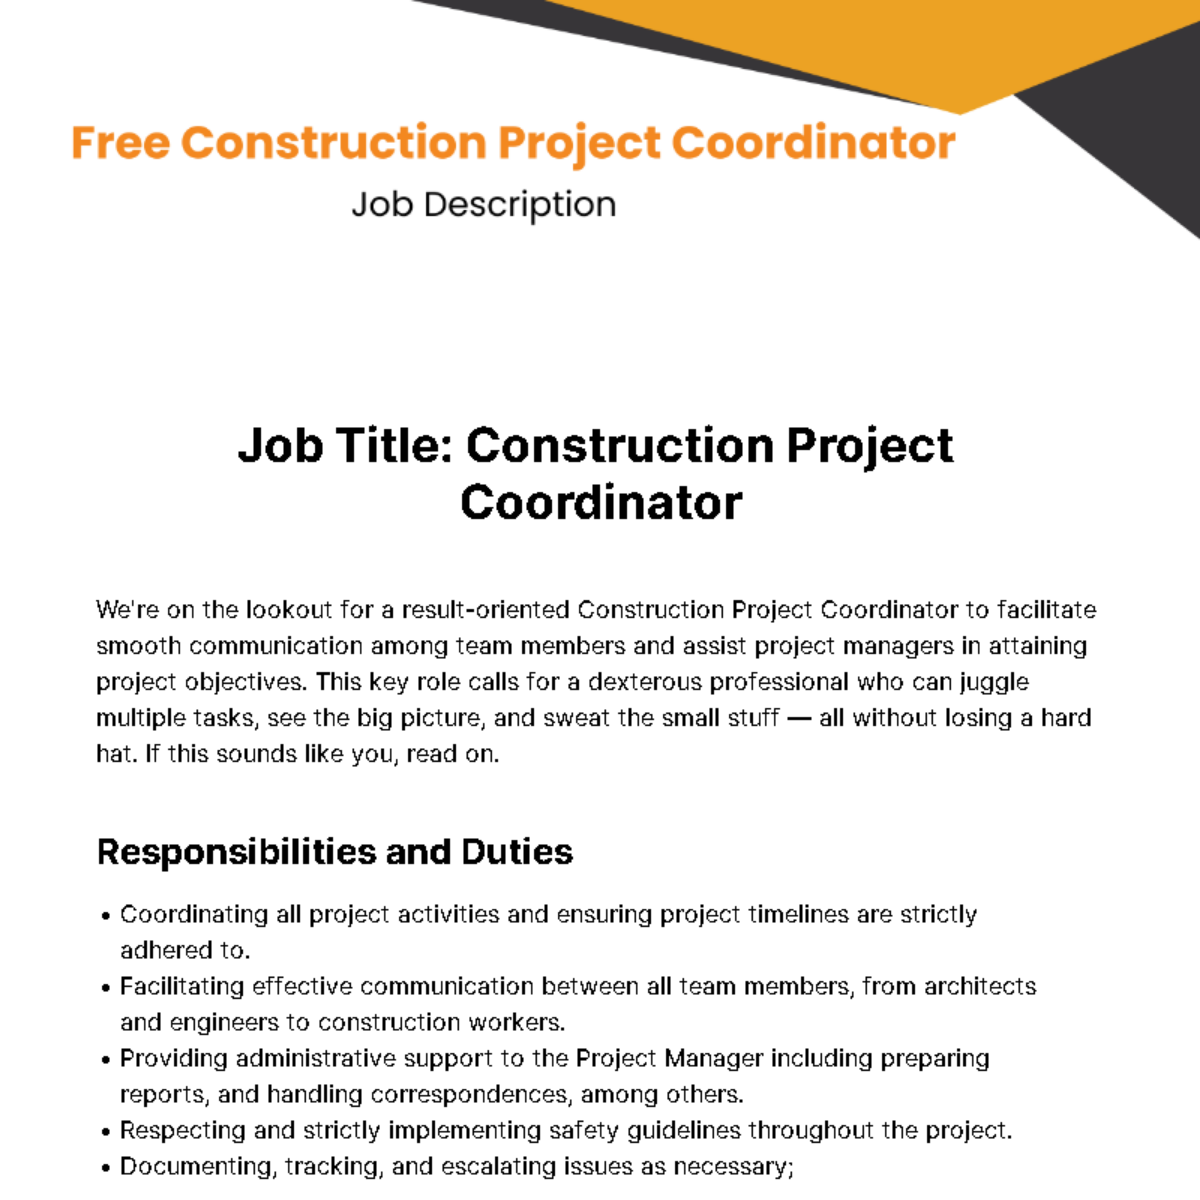 Free Construction Project Coordinator Job Description Template